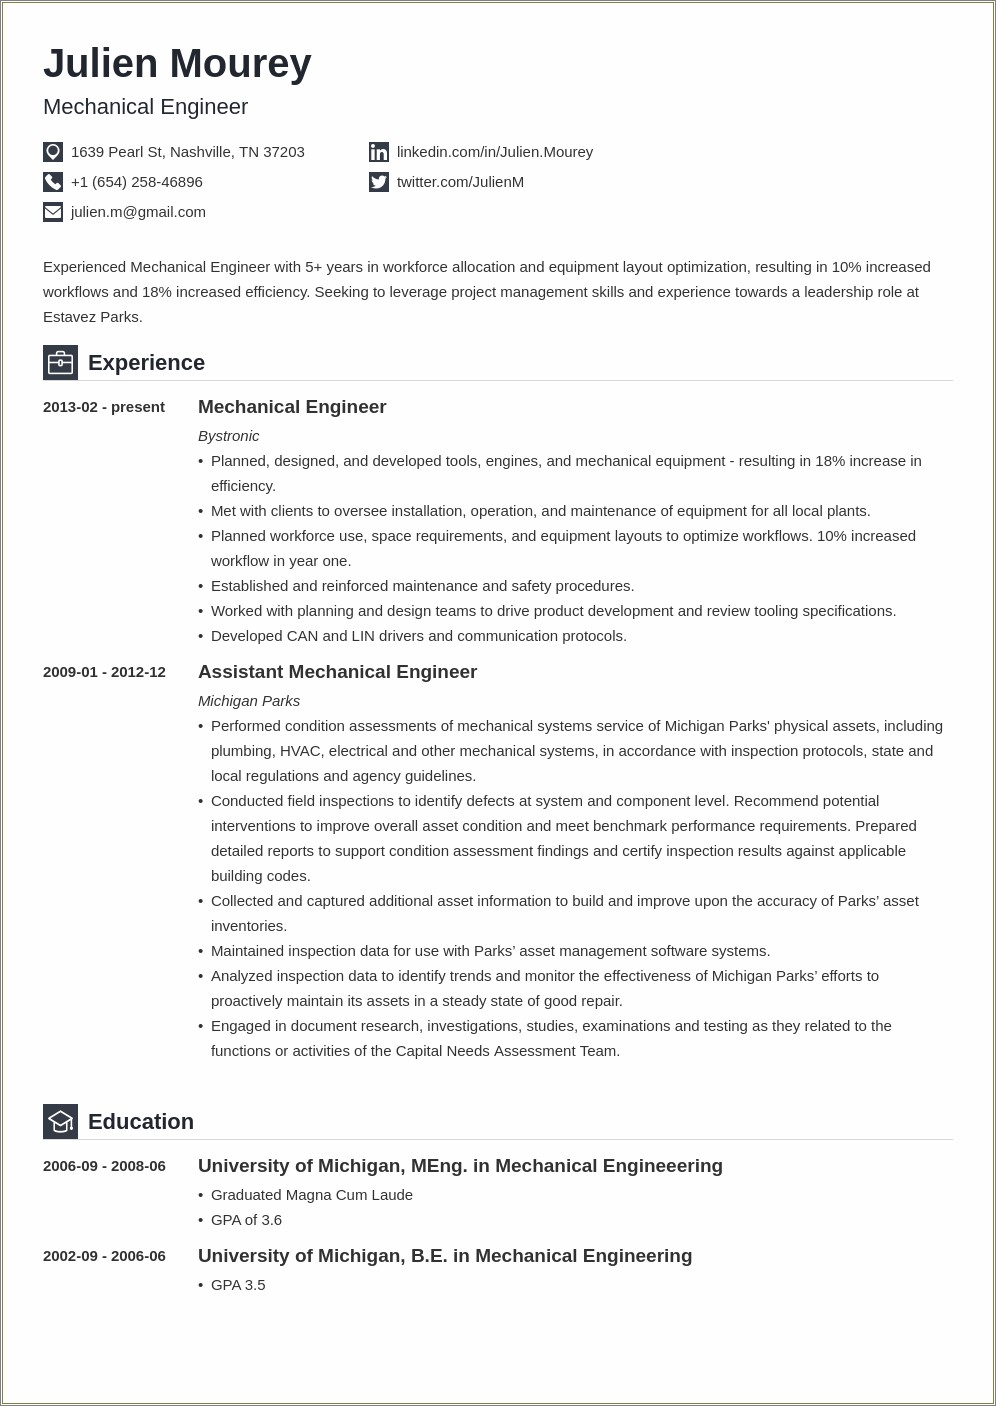 Resume Summary Statement For Mechanical Engineer